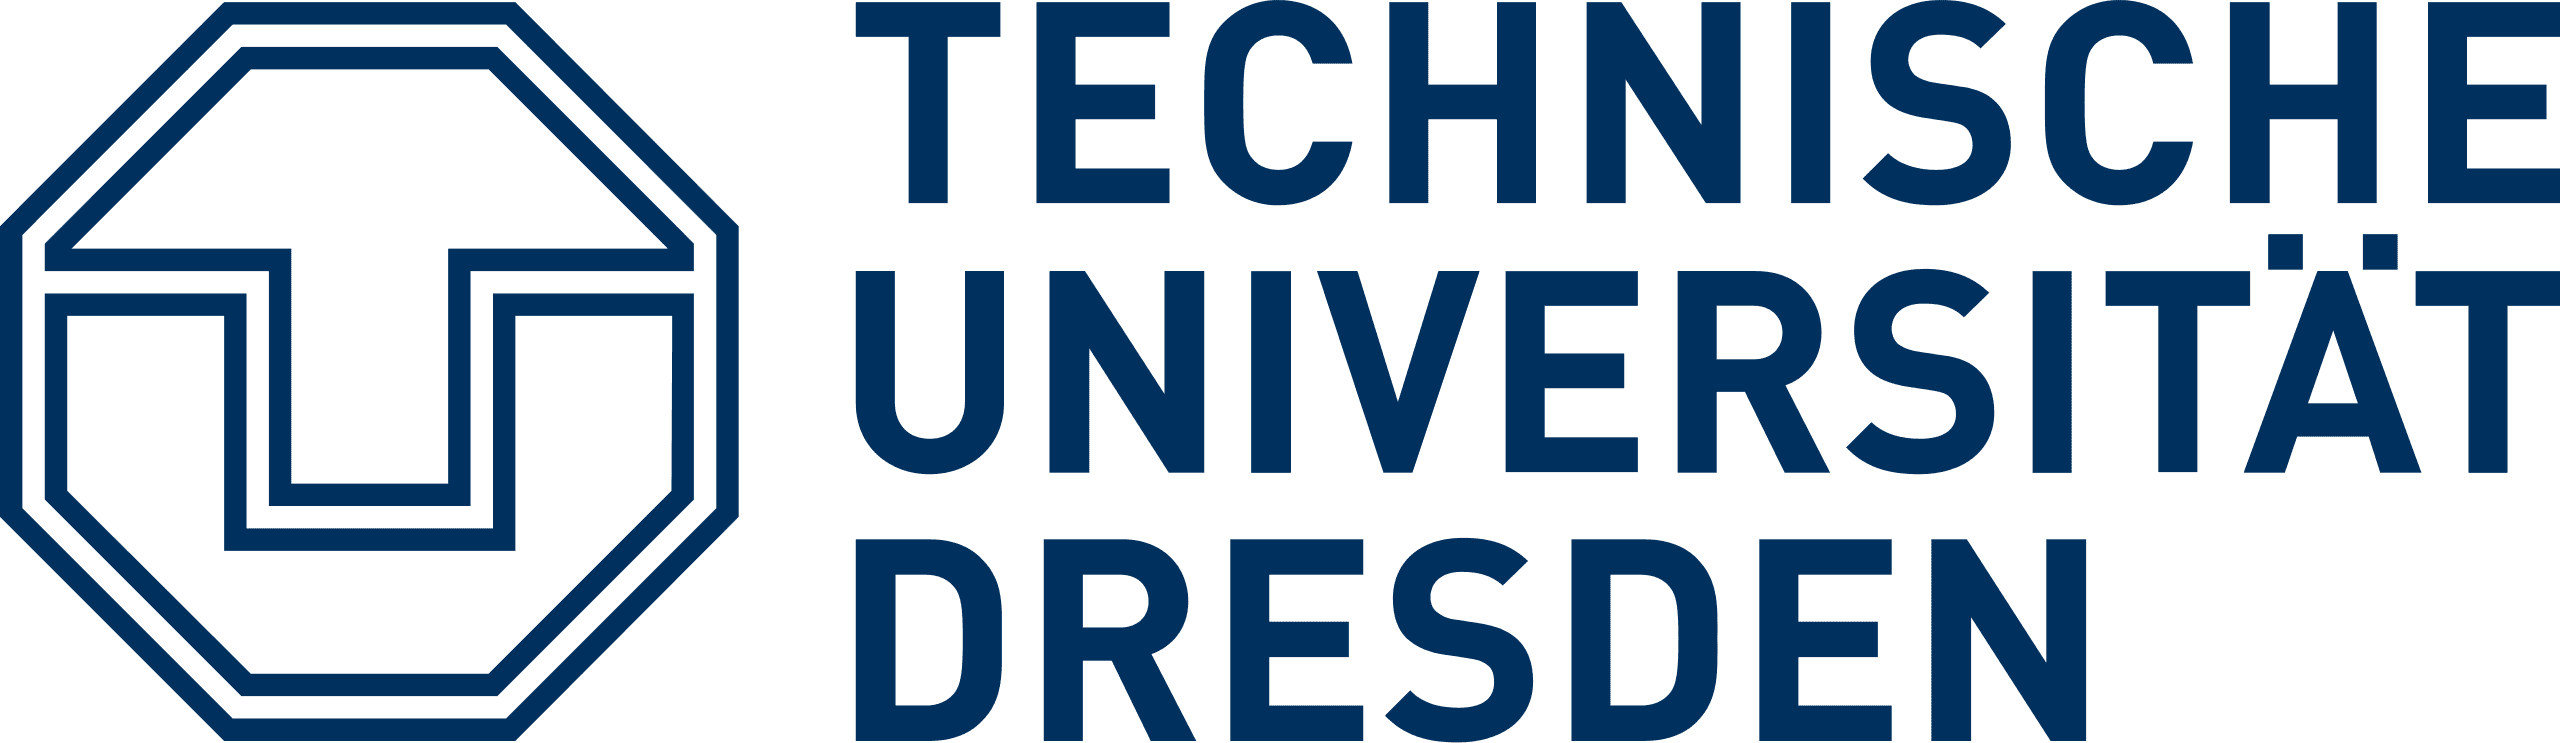 technische-universitat-dresden-bcd4bc8bfc-cover-picture